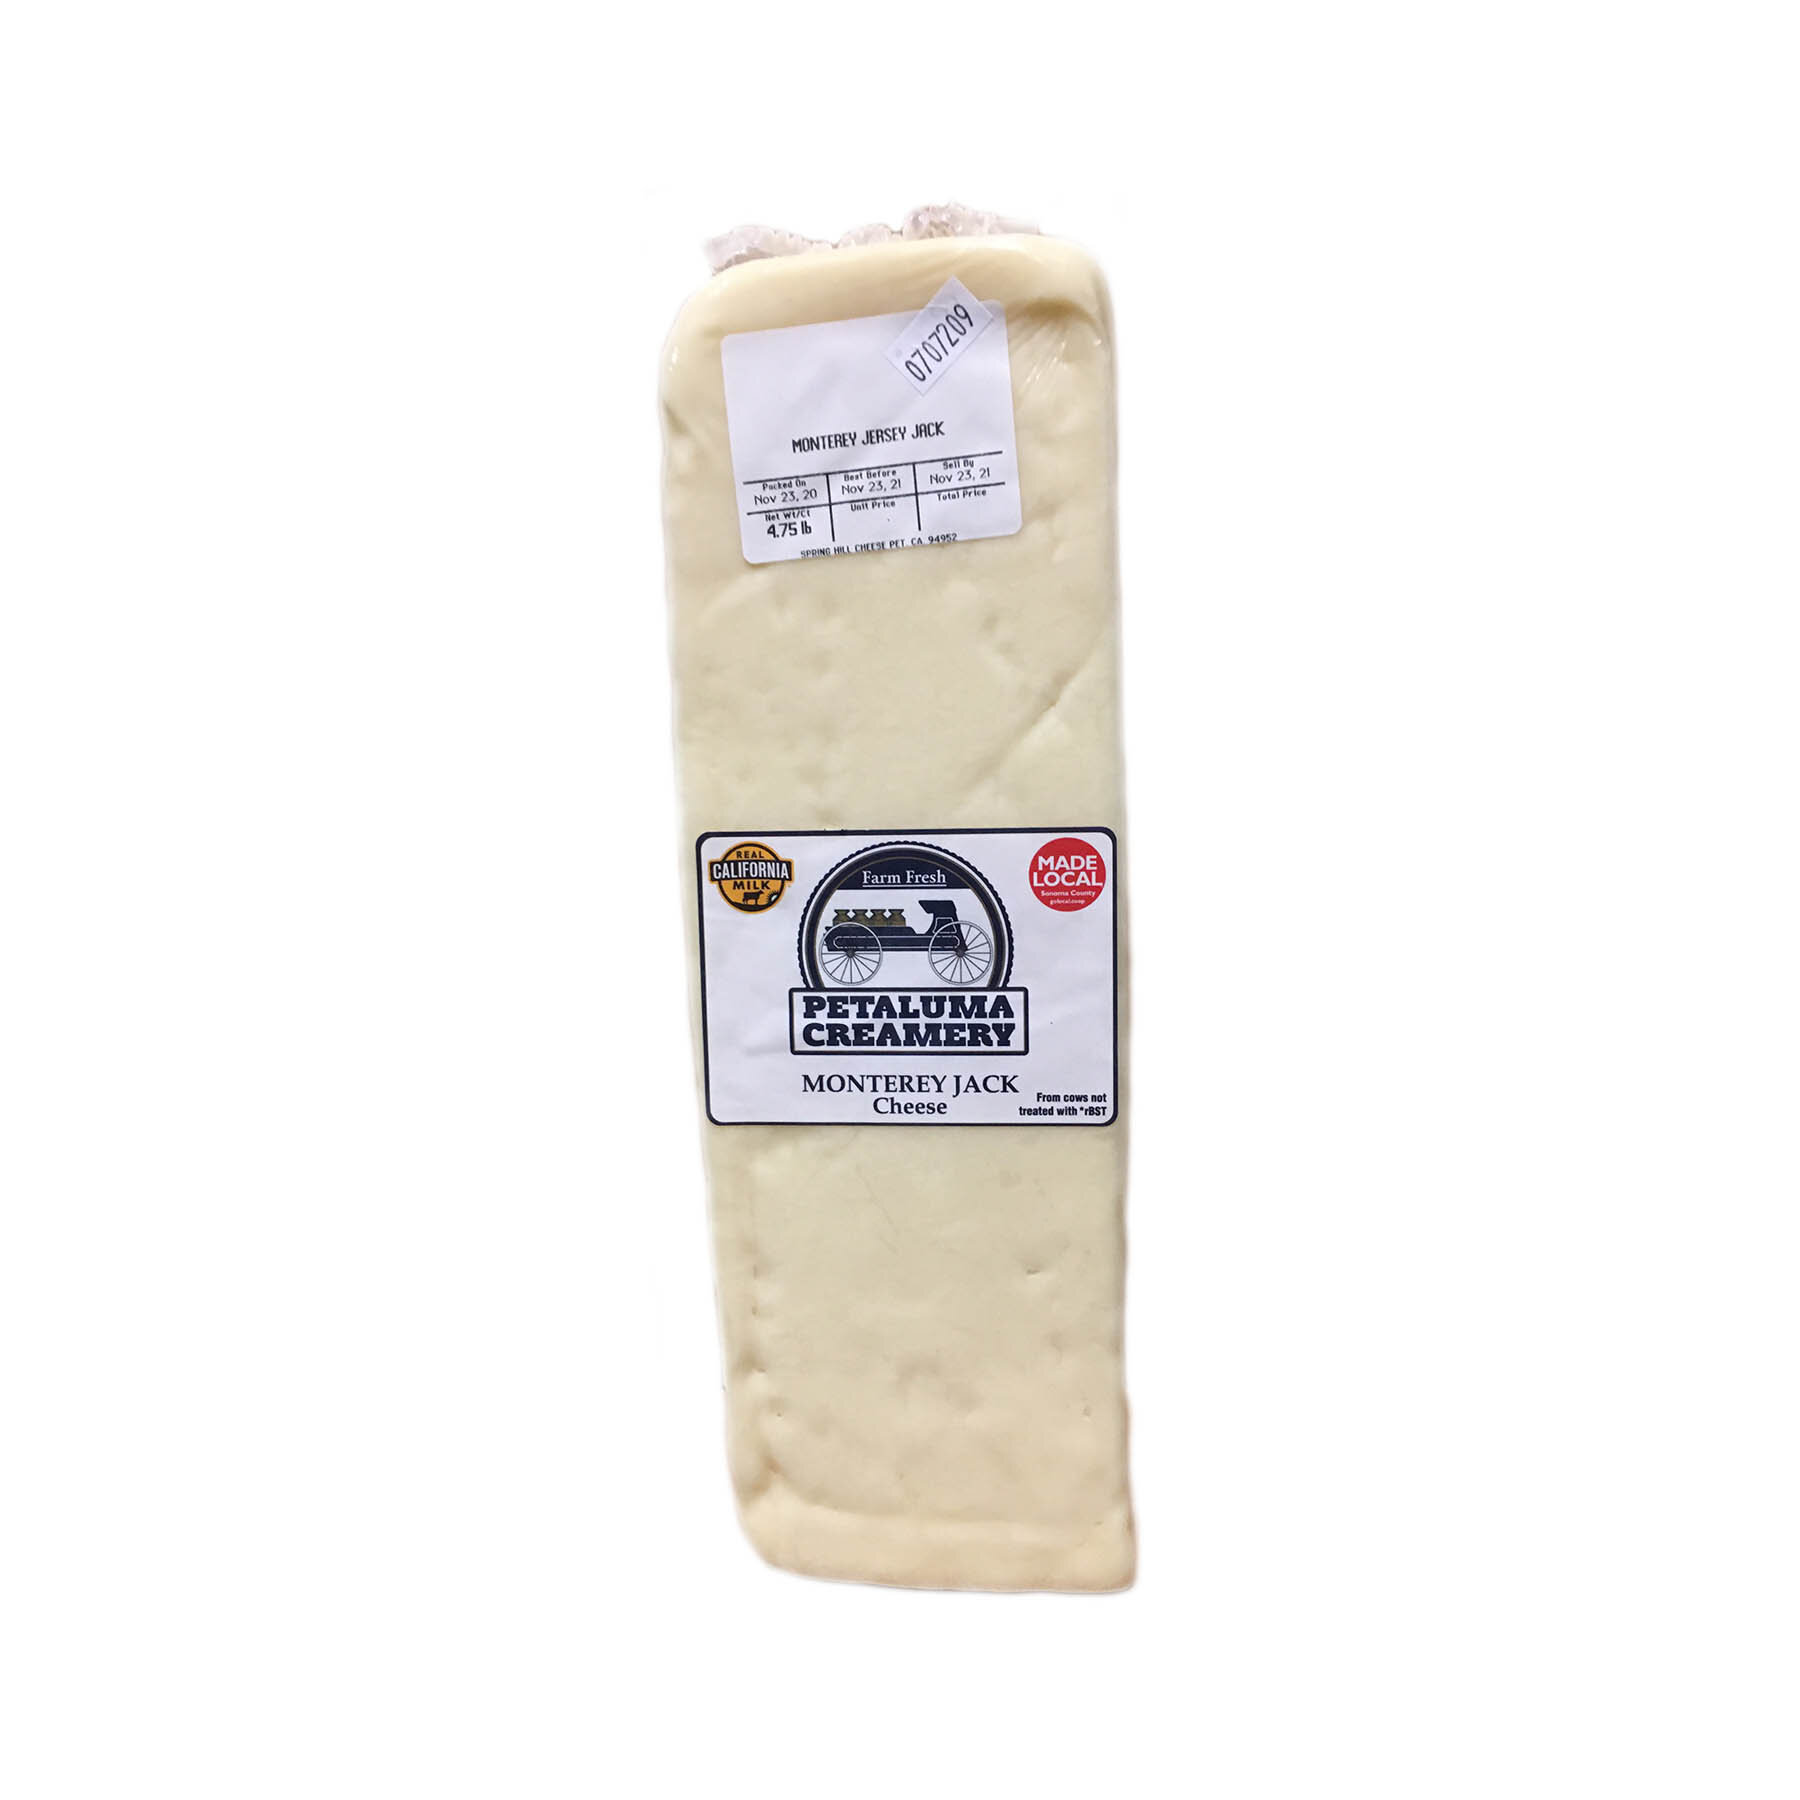 Petaluma Creamery - Artisanal Cheese